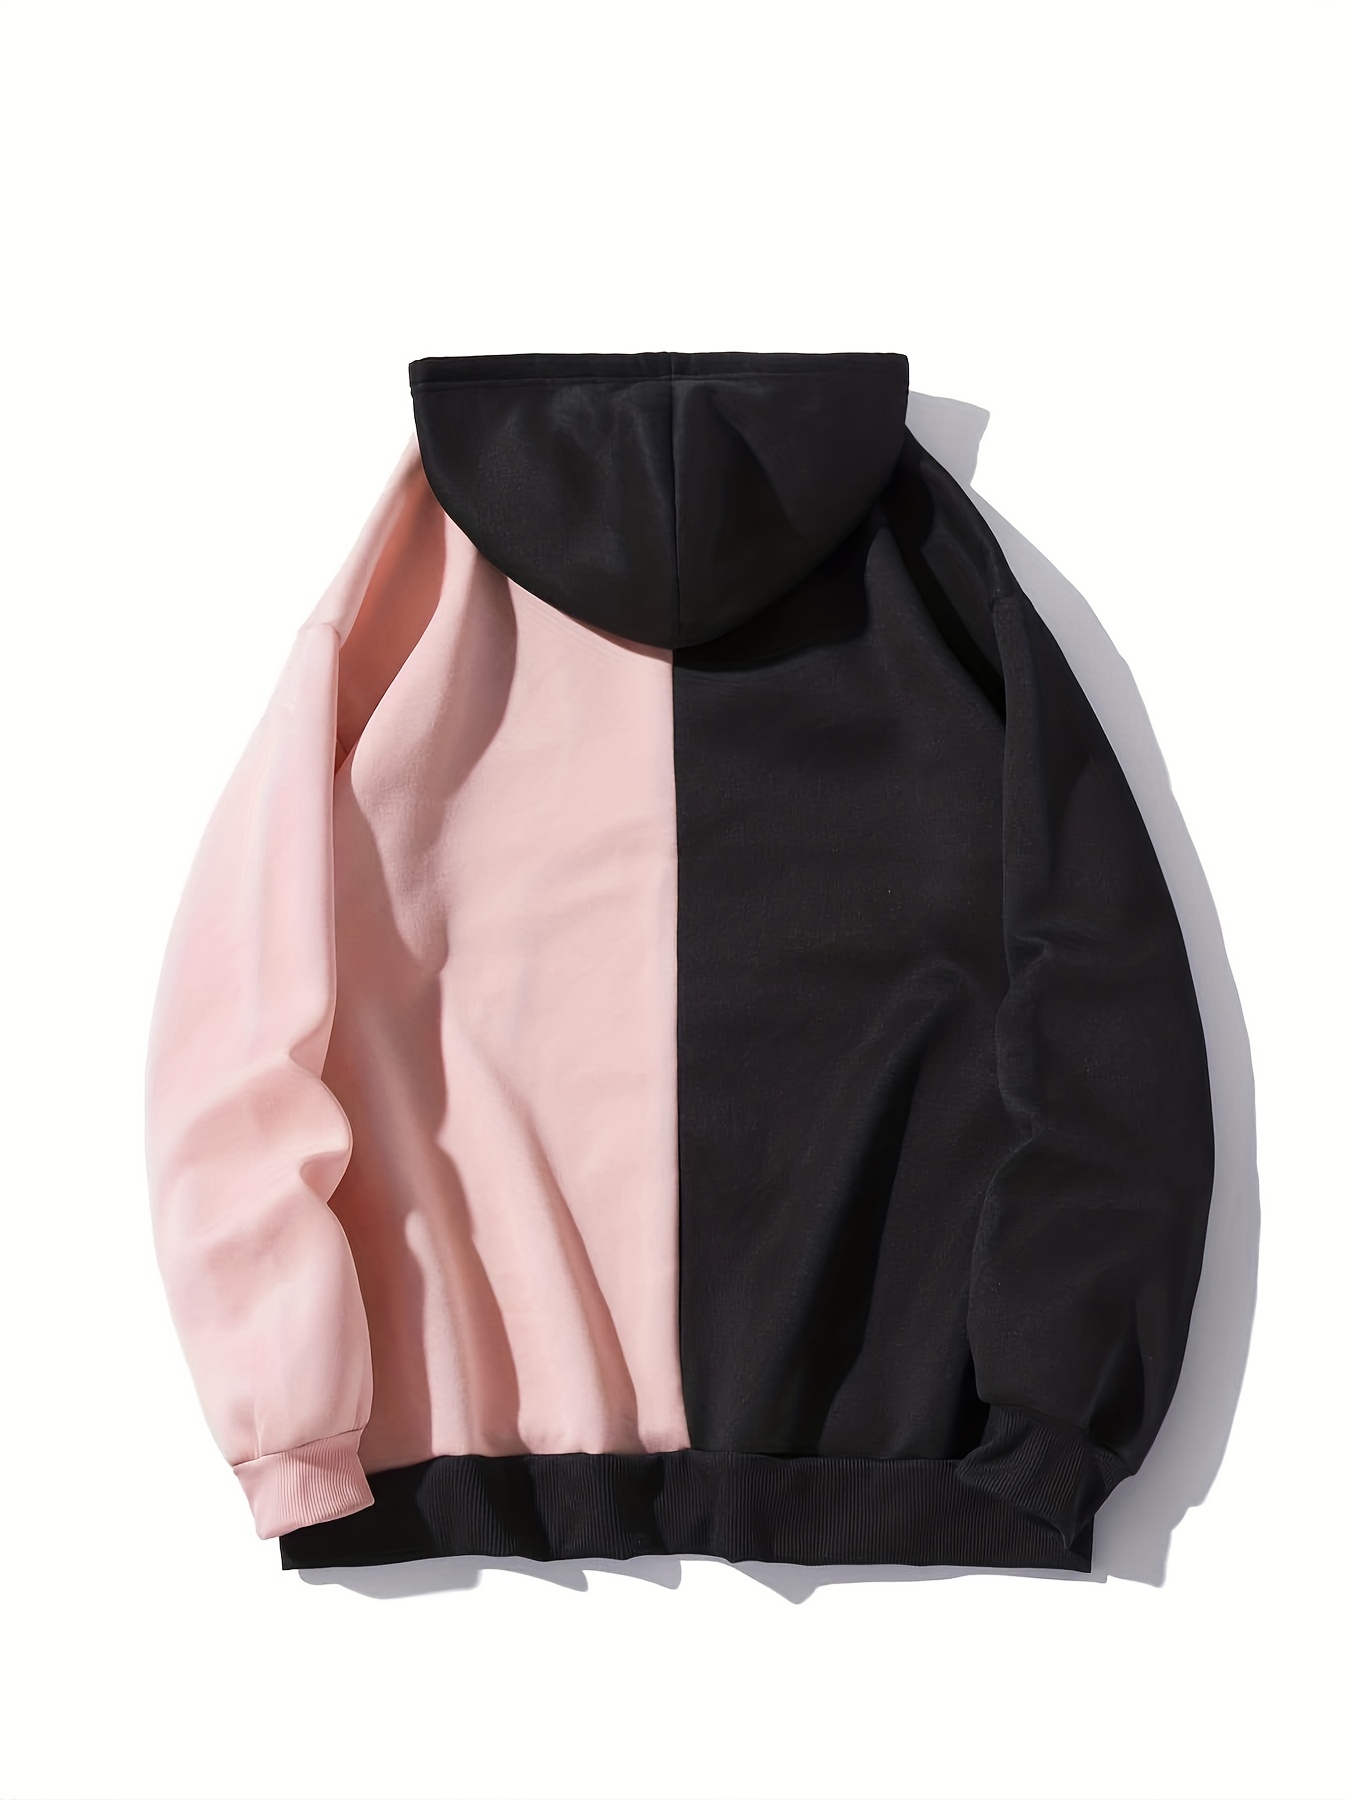 pink brand all black zip up jacket